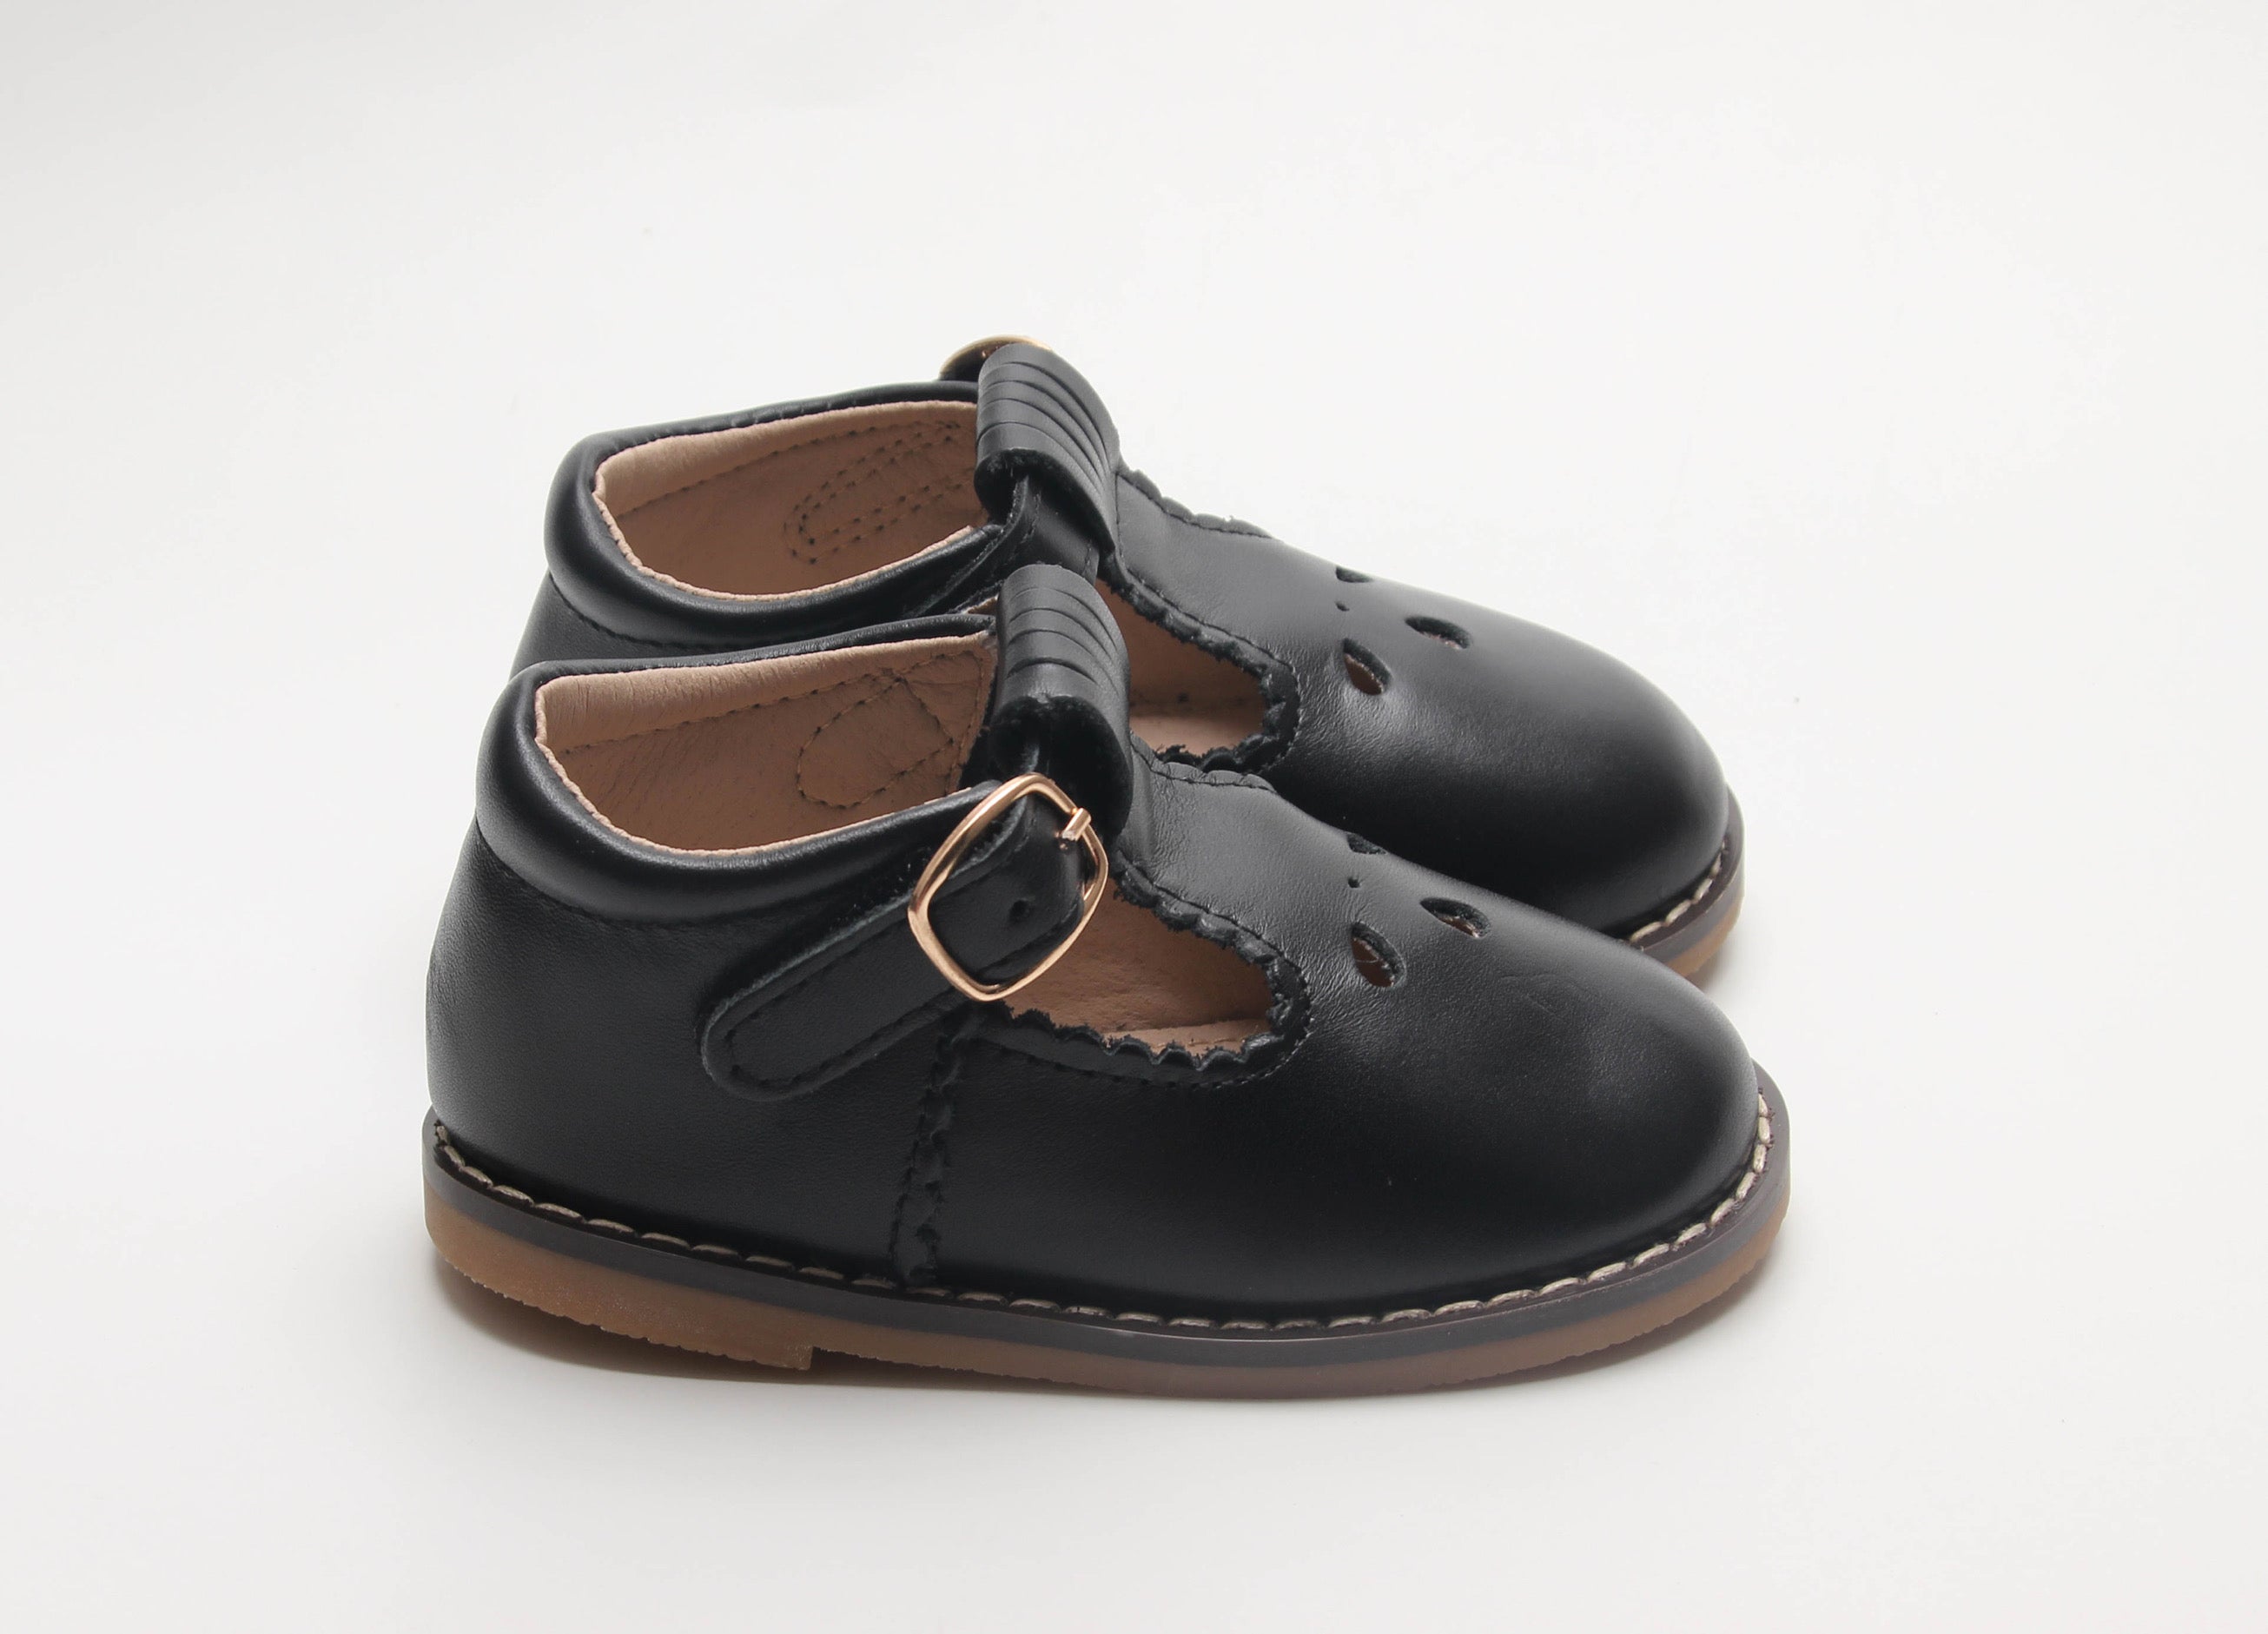 Black hard sole shoes